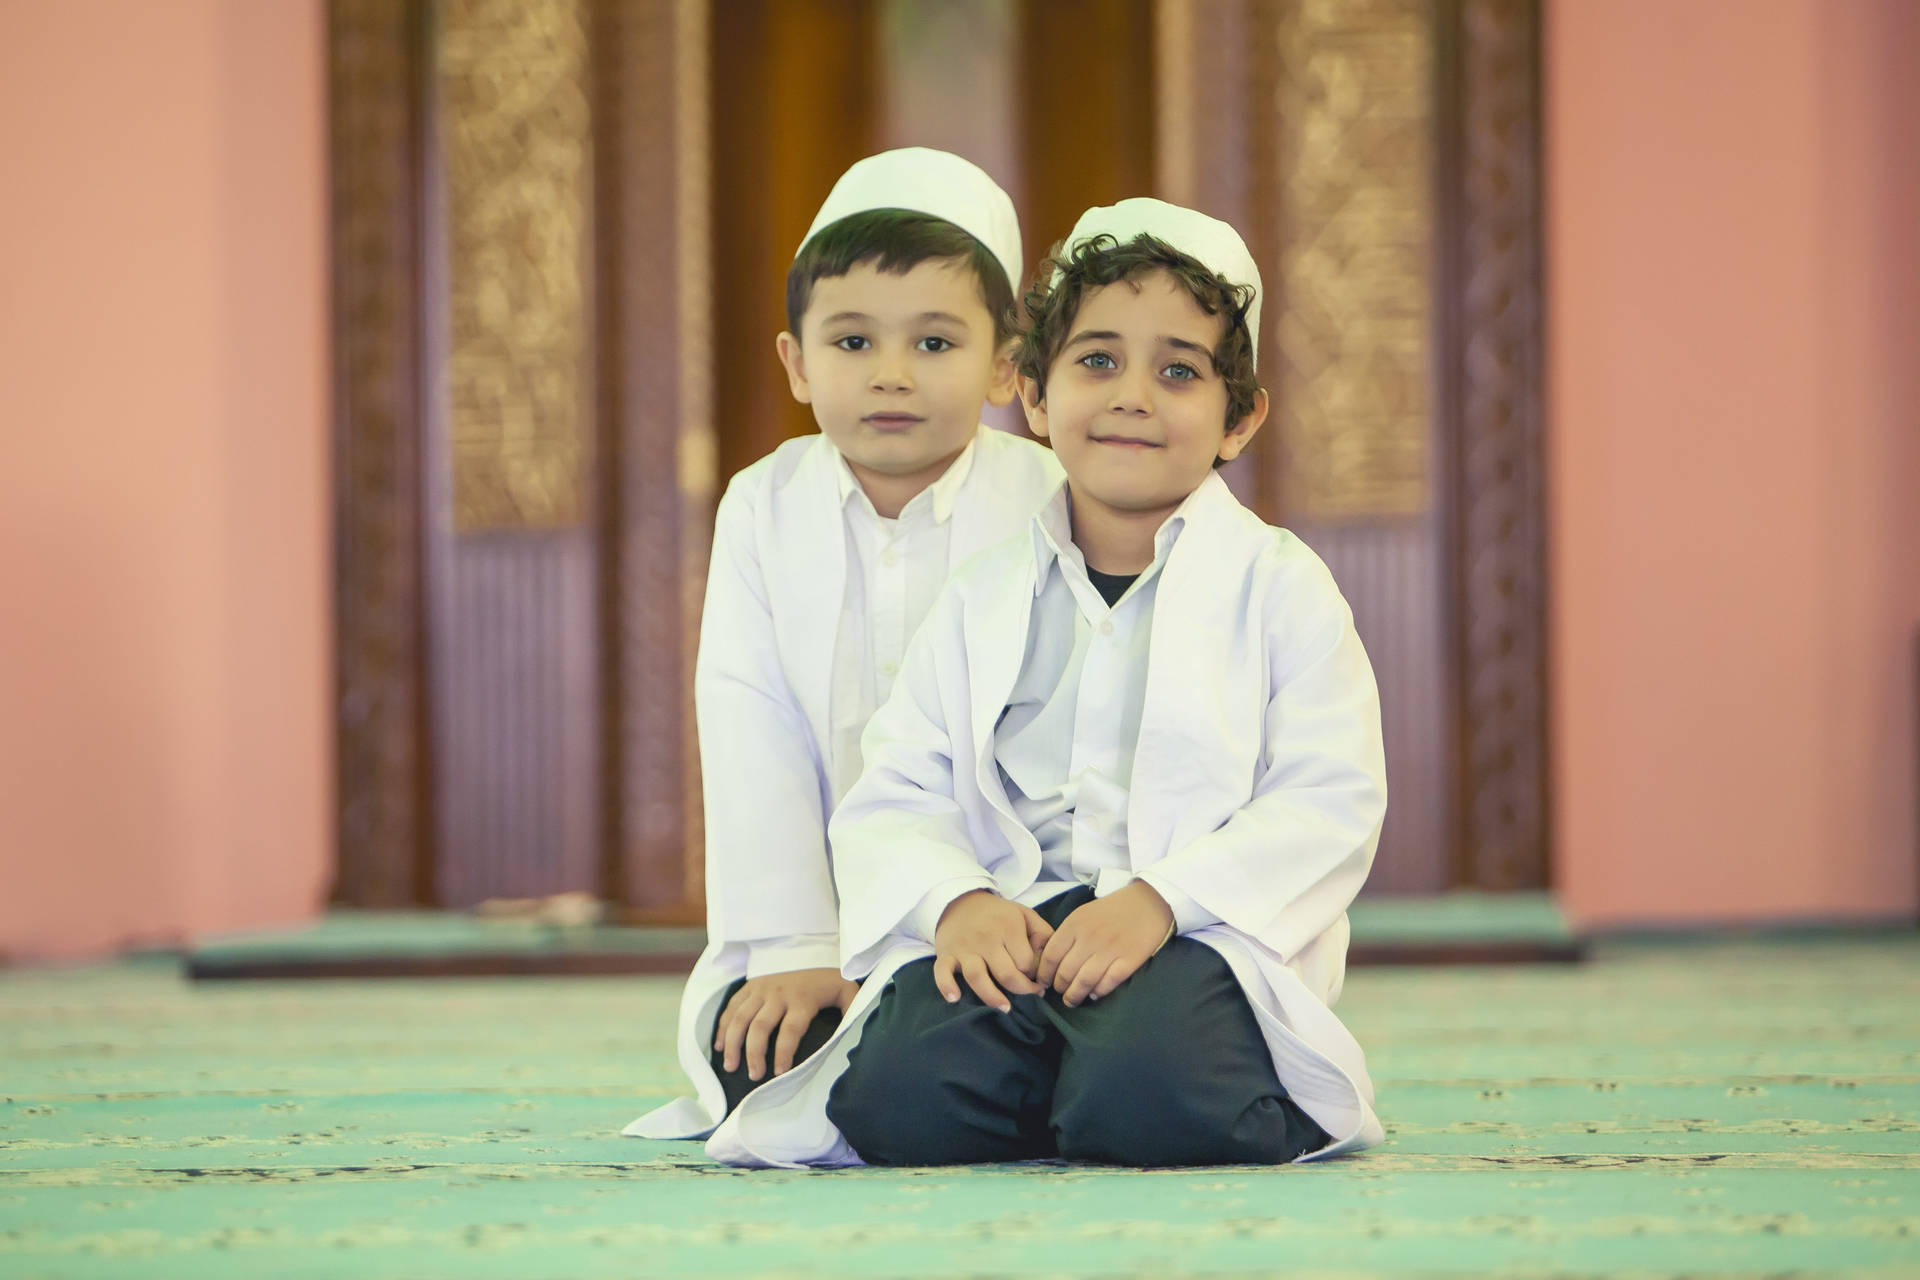 Cute Kneeling Islamic Boys Picture